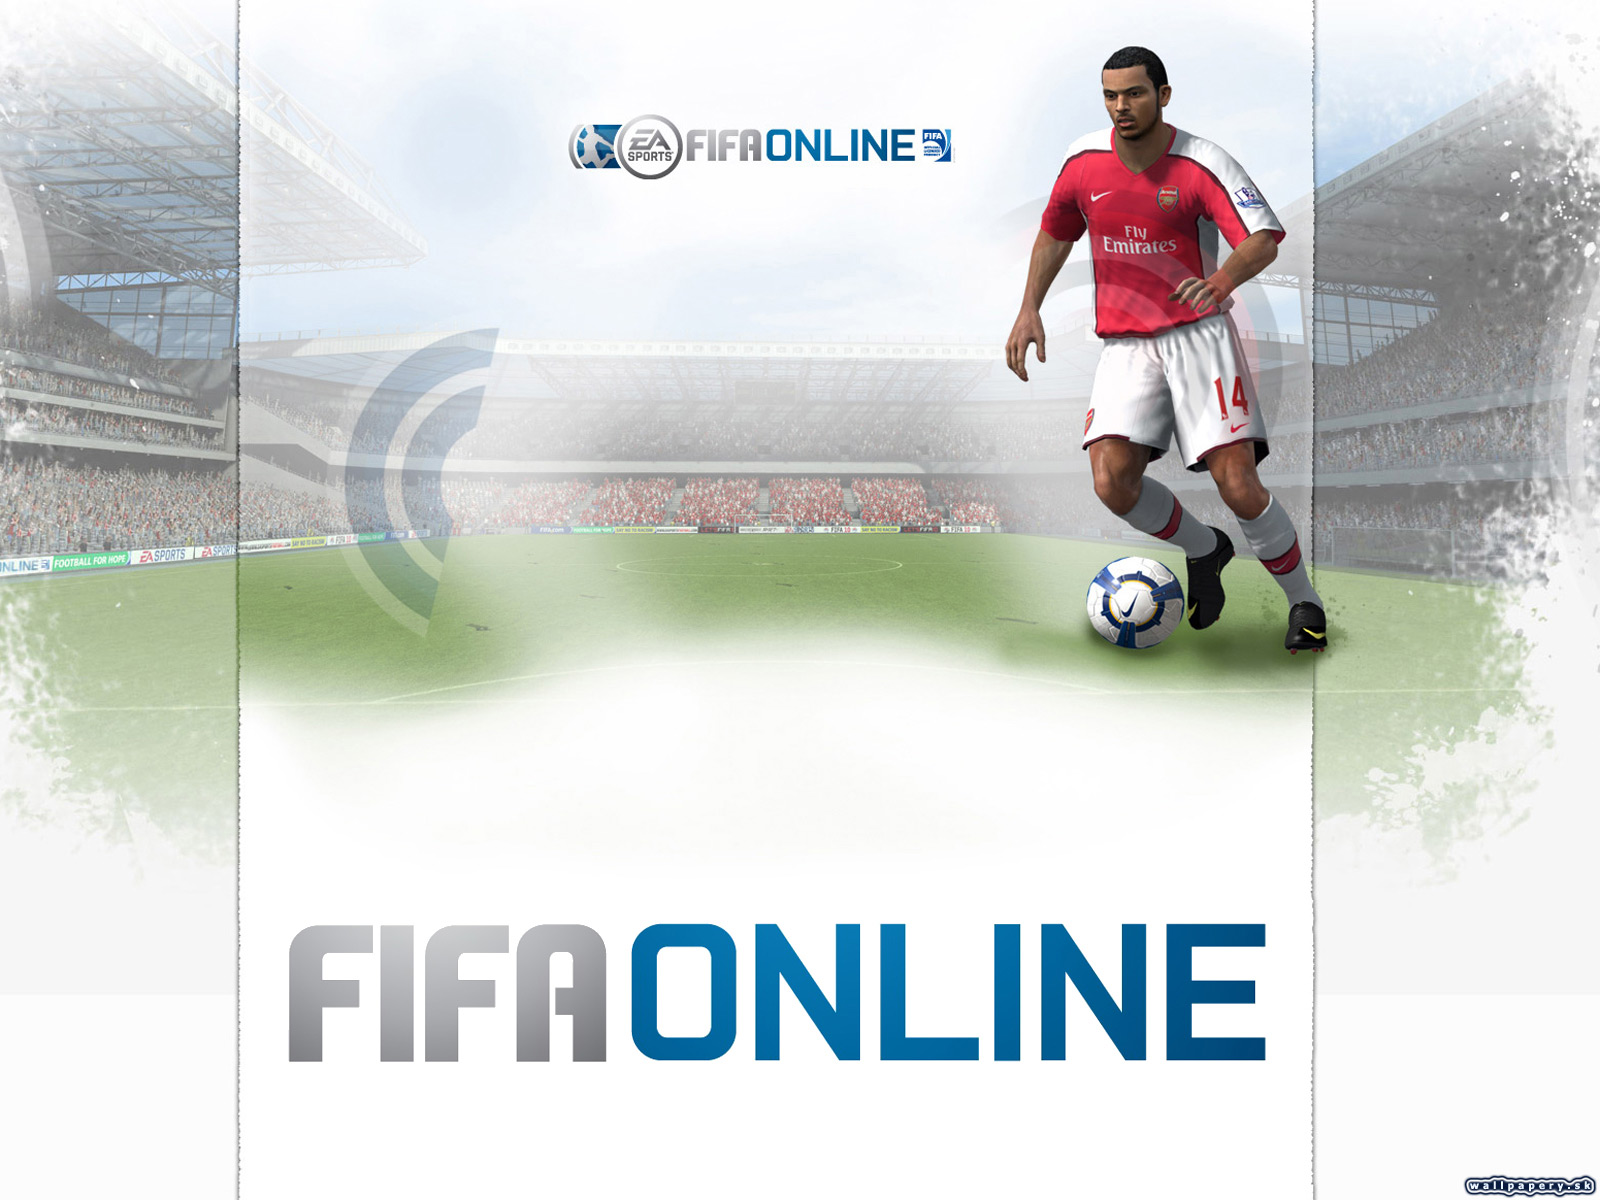 FIFA Online - wallpaper 2